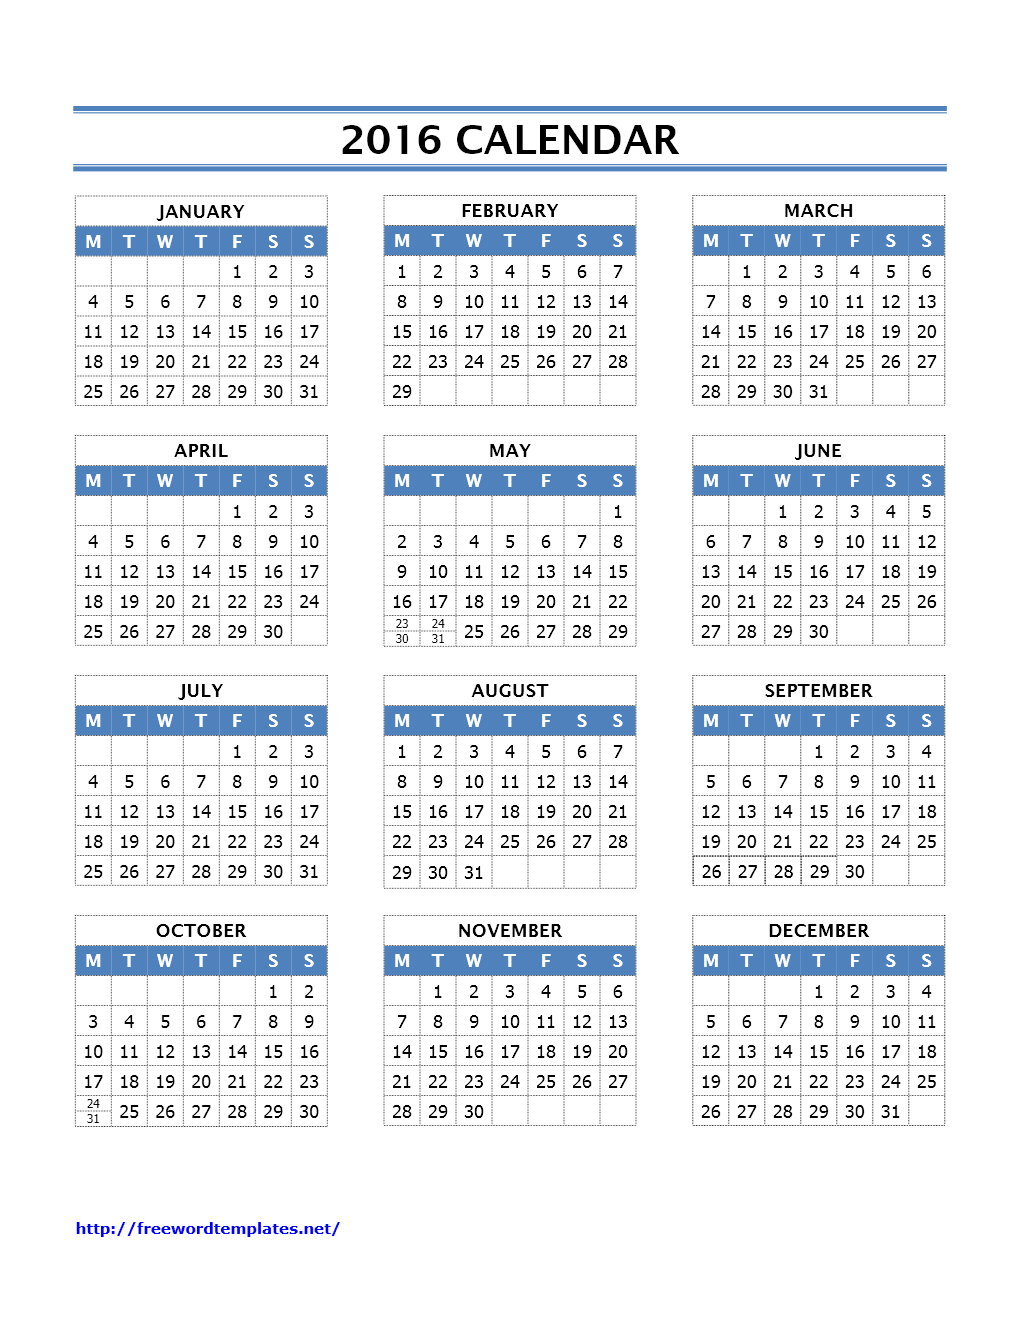 2016 Calendar Templates | Freewordtemplates.net